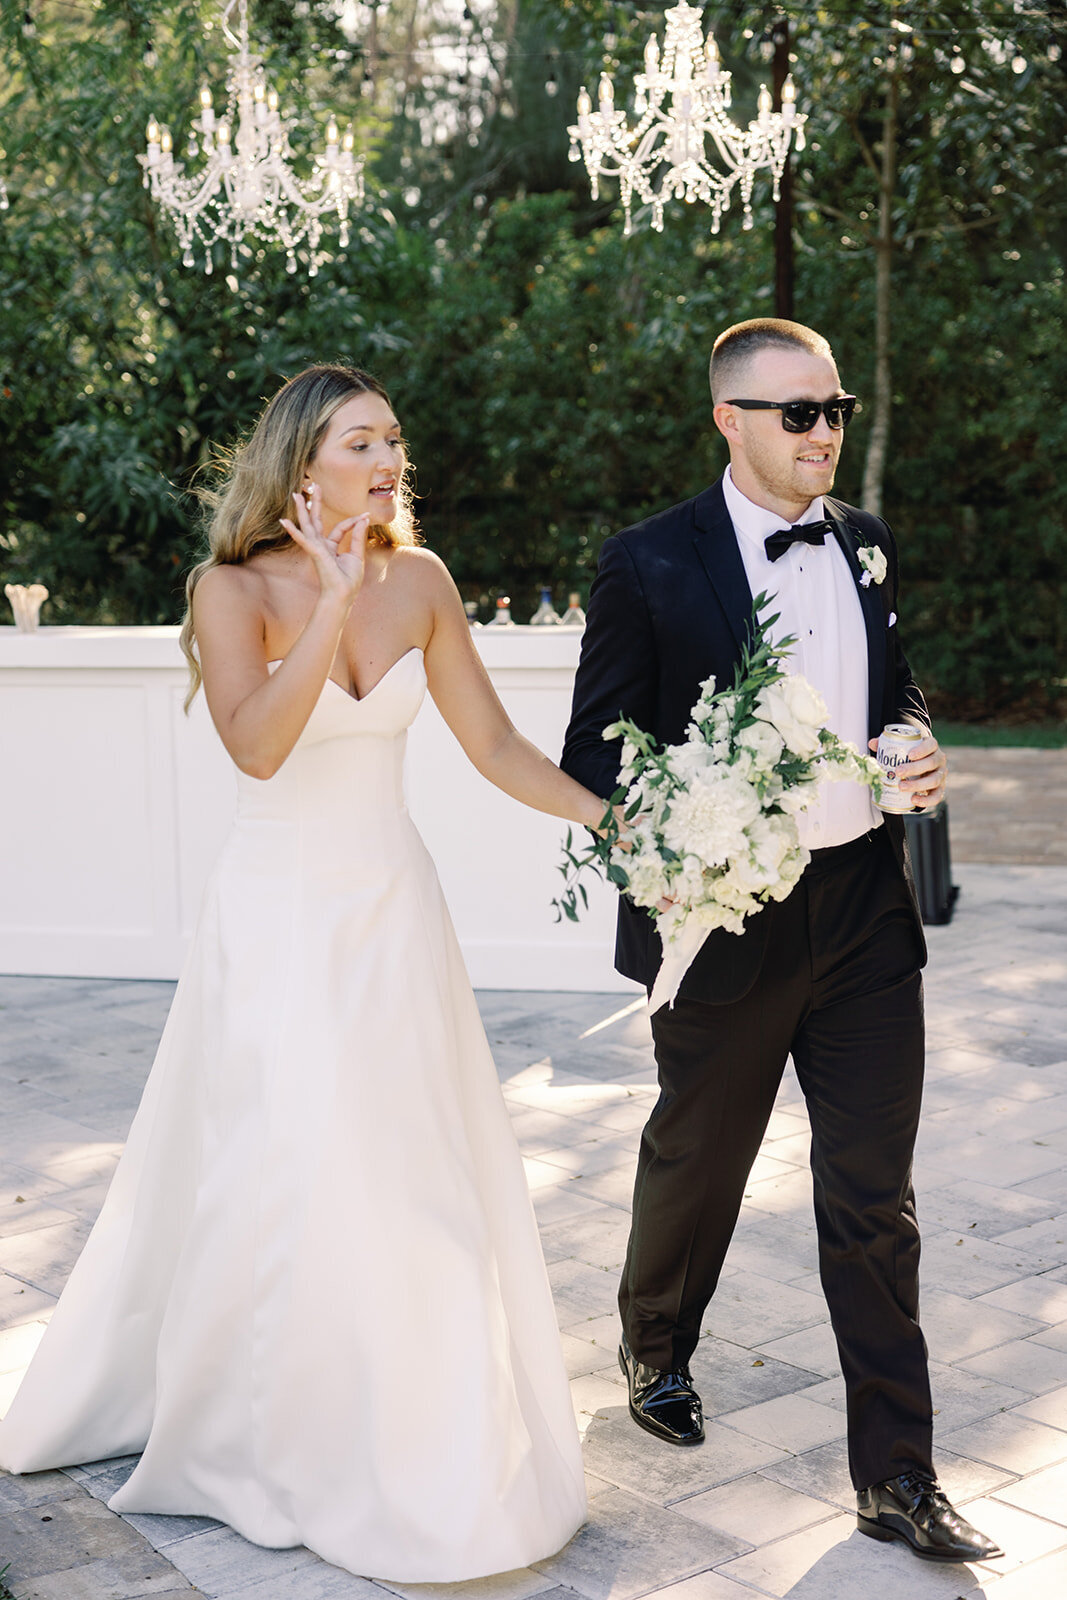 CORNELIA ZAISS PHOTOGRAPHY LEAH + ROBERT'S WEDDING 0956_websize